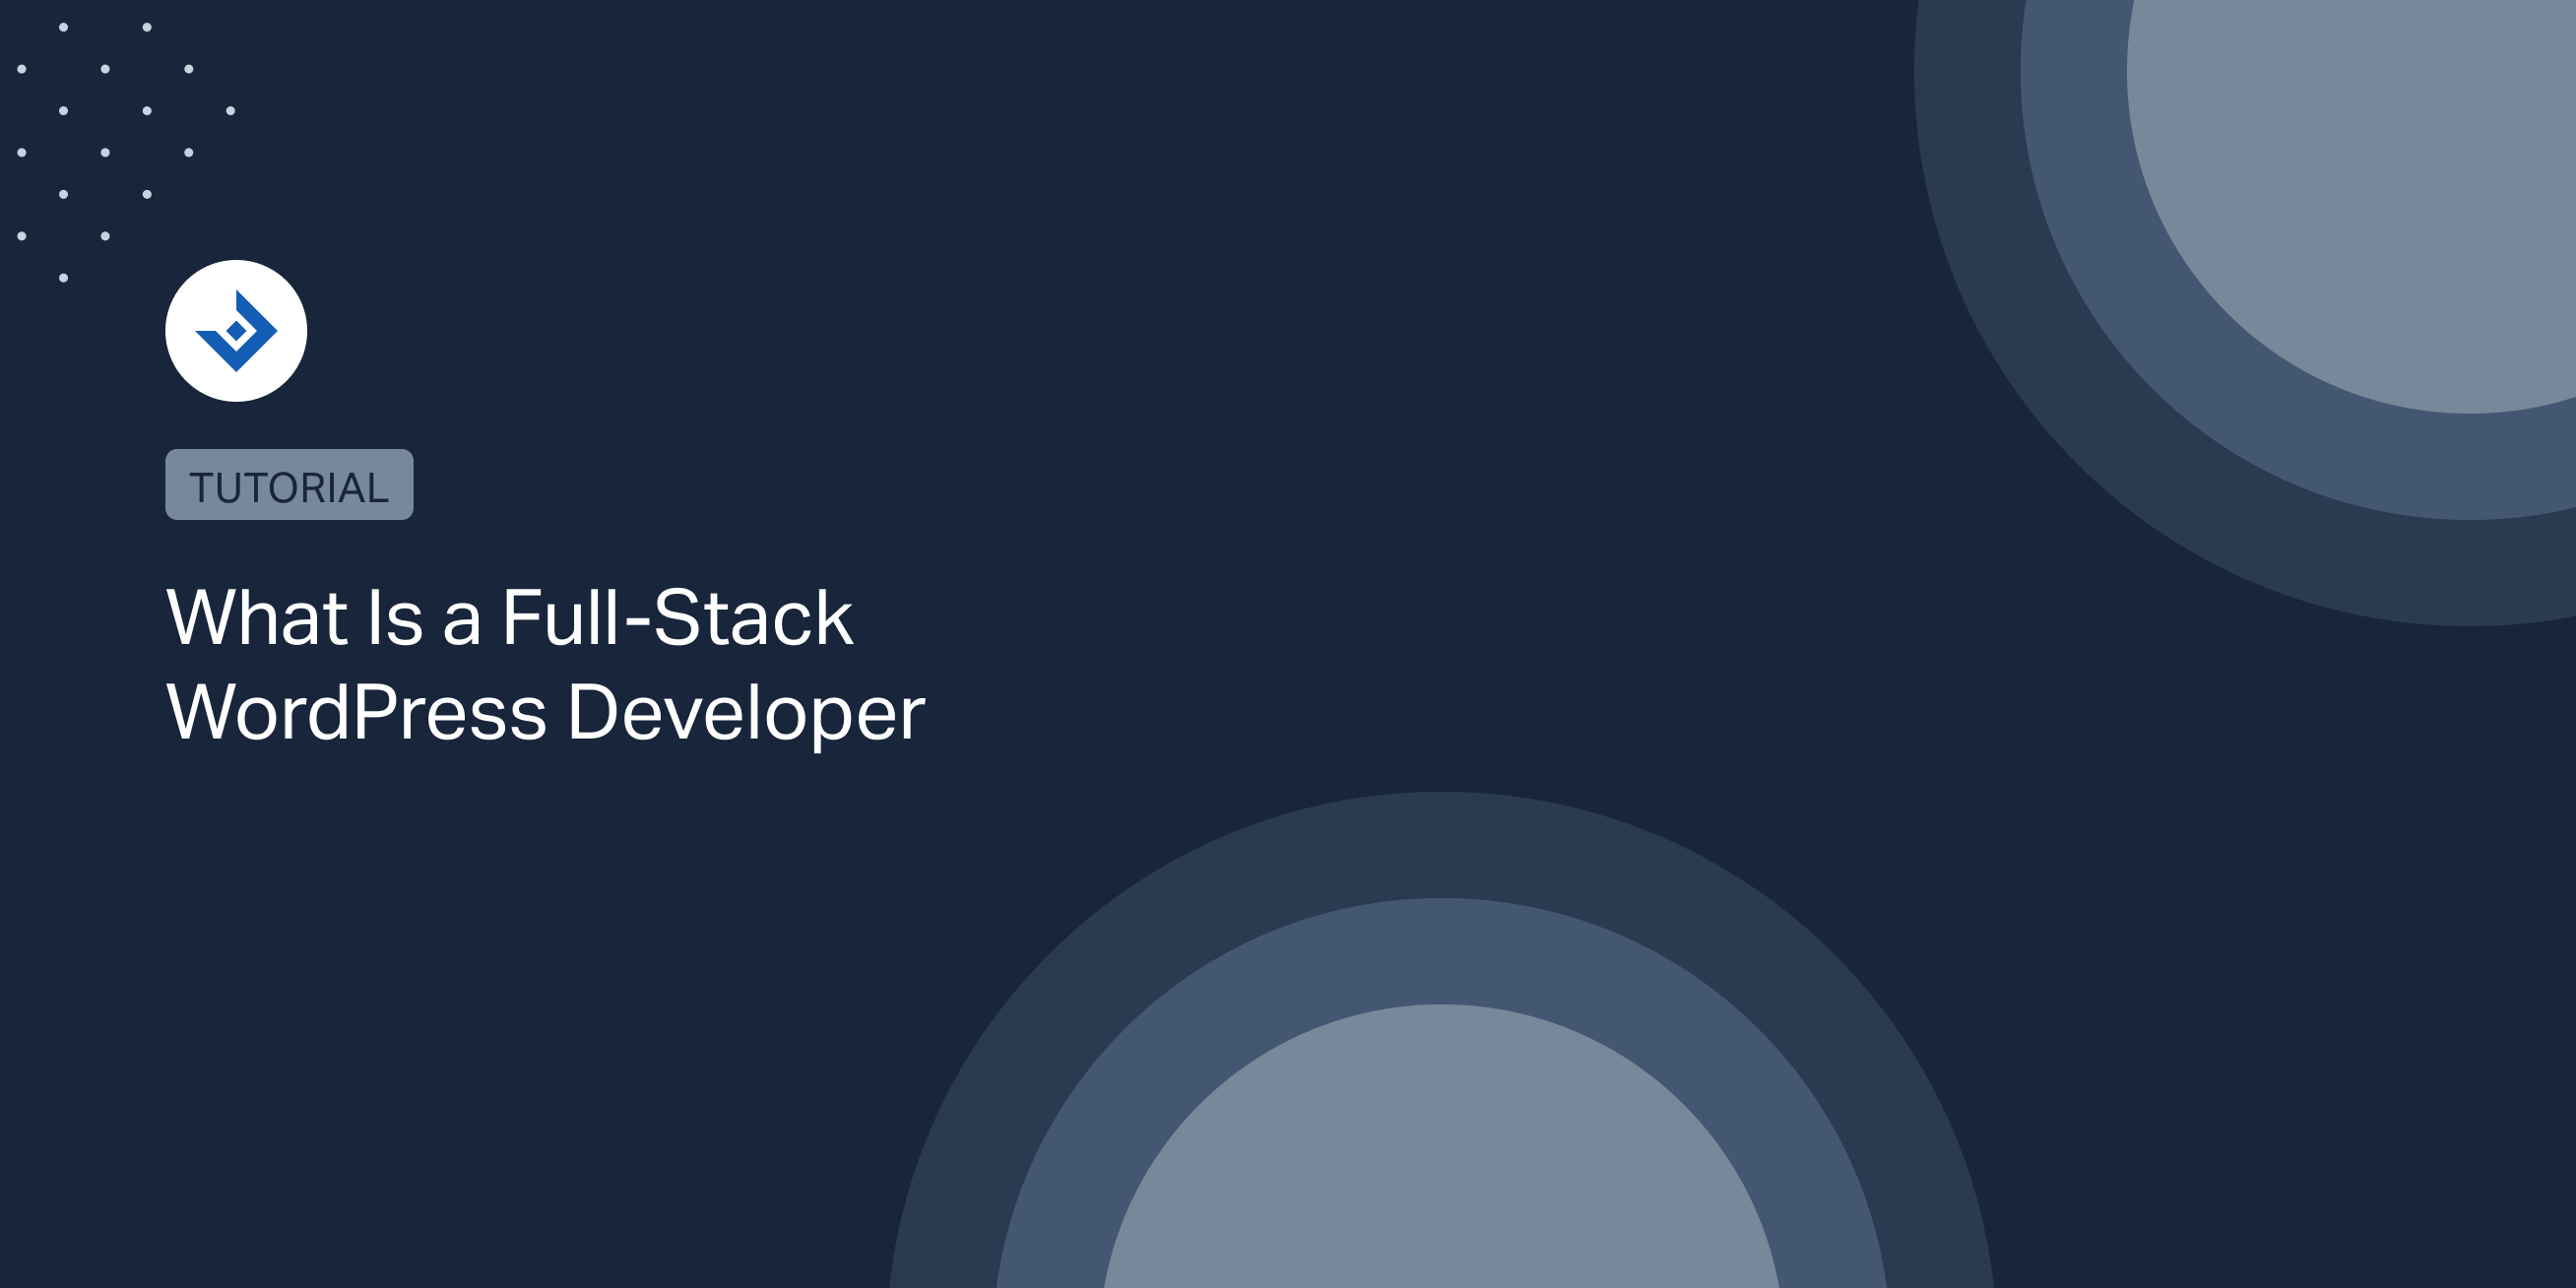 What is a Full-Stack WordPress Developer